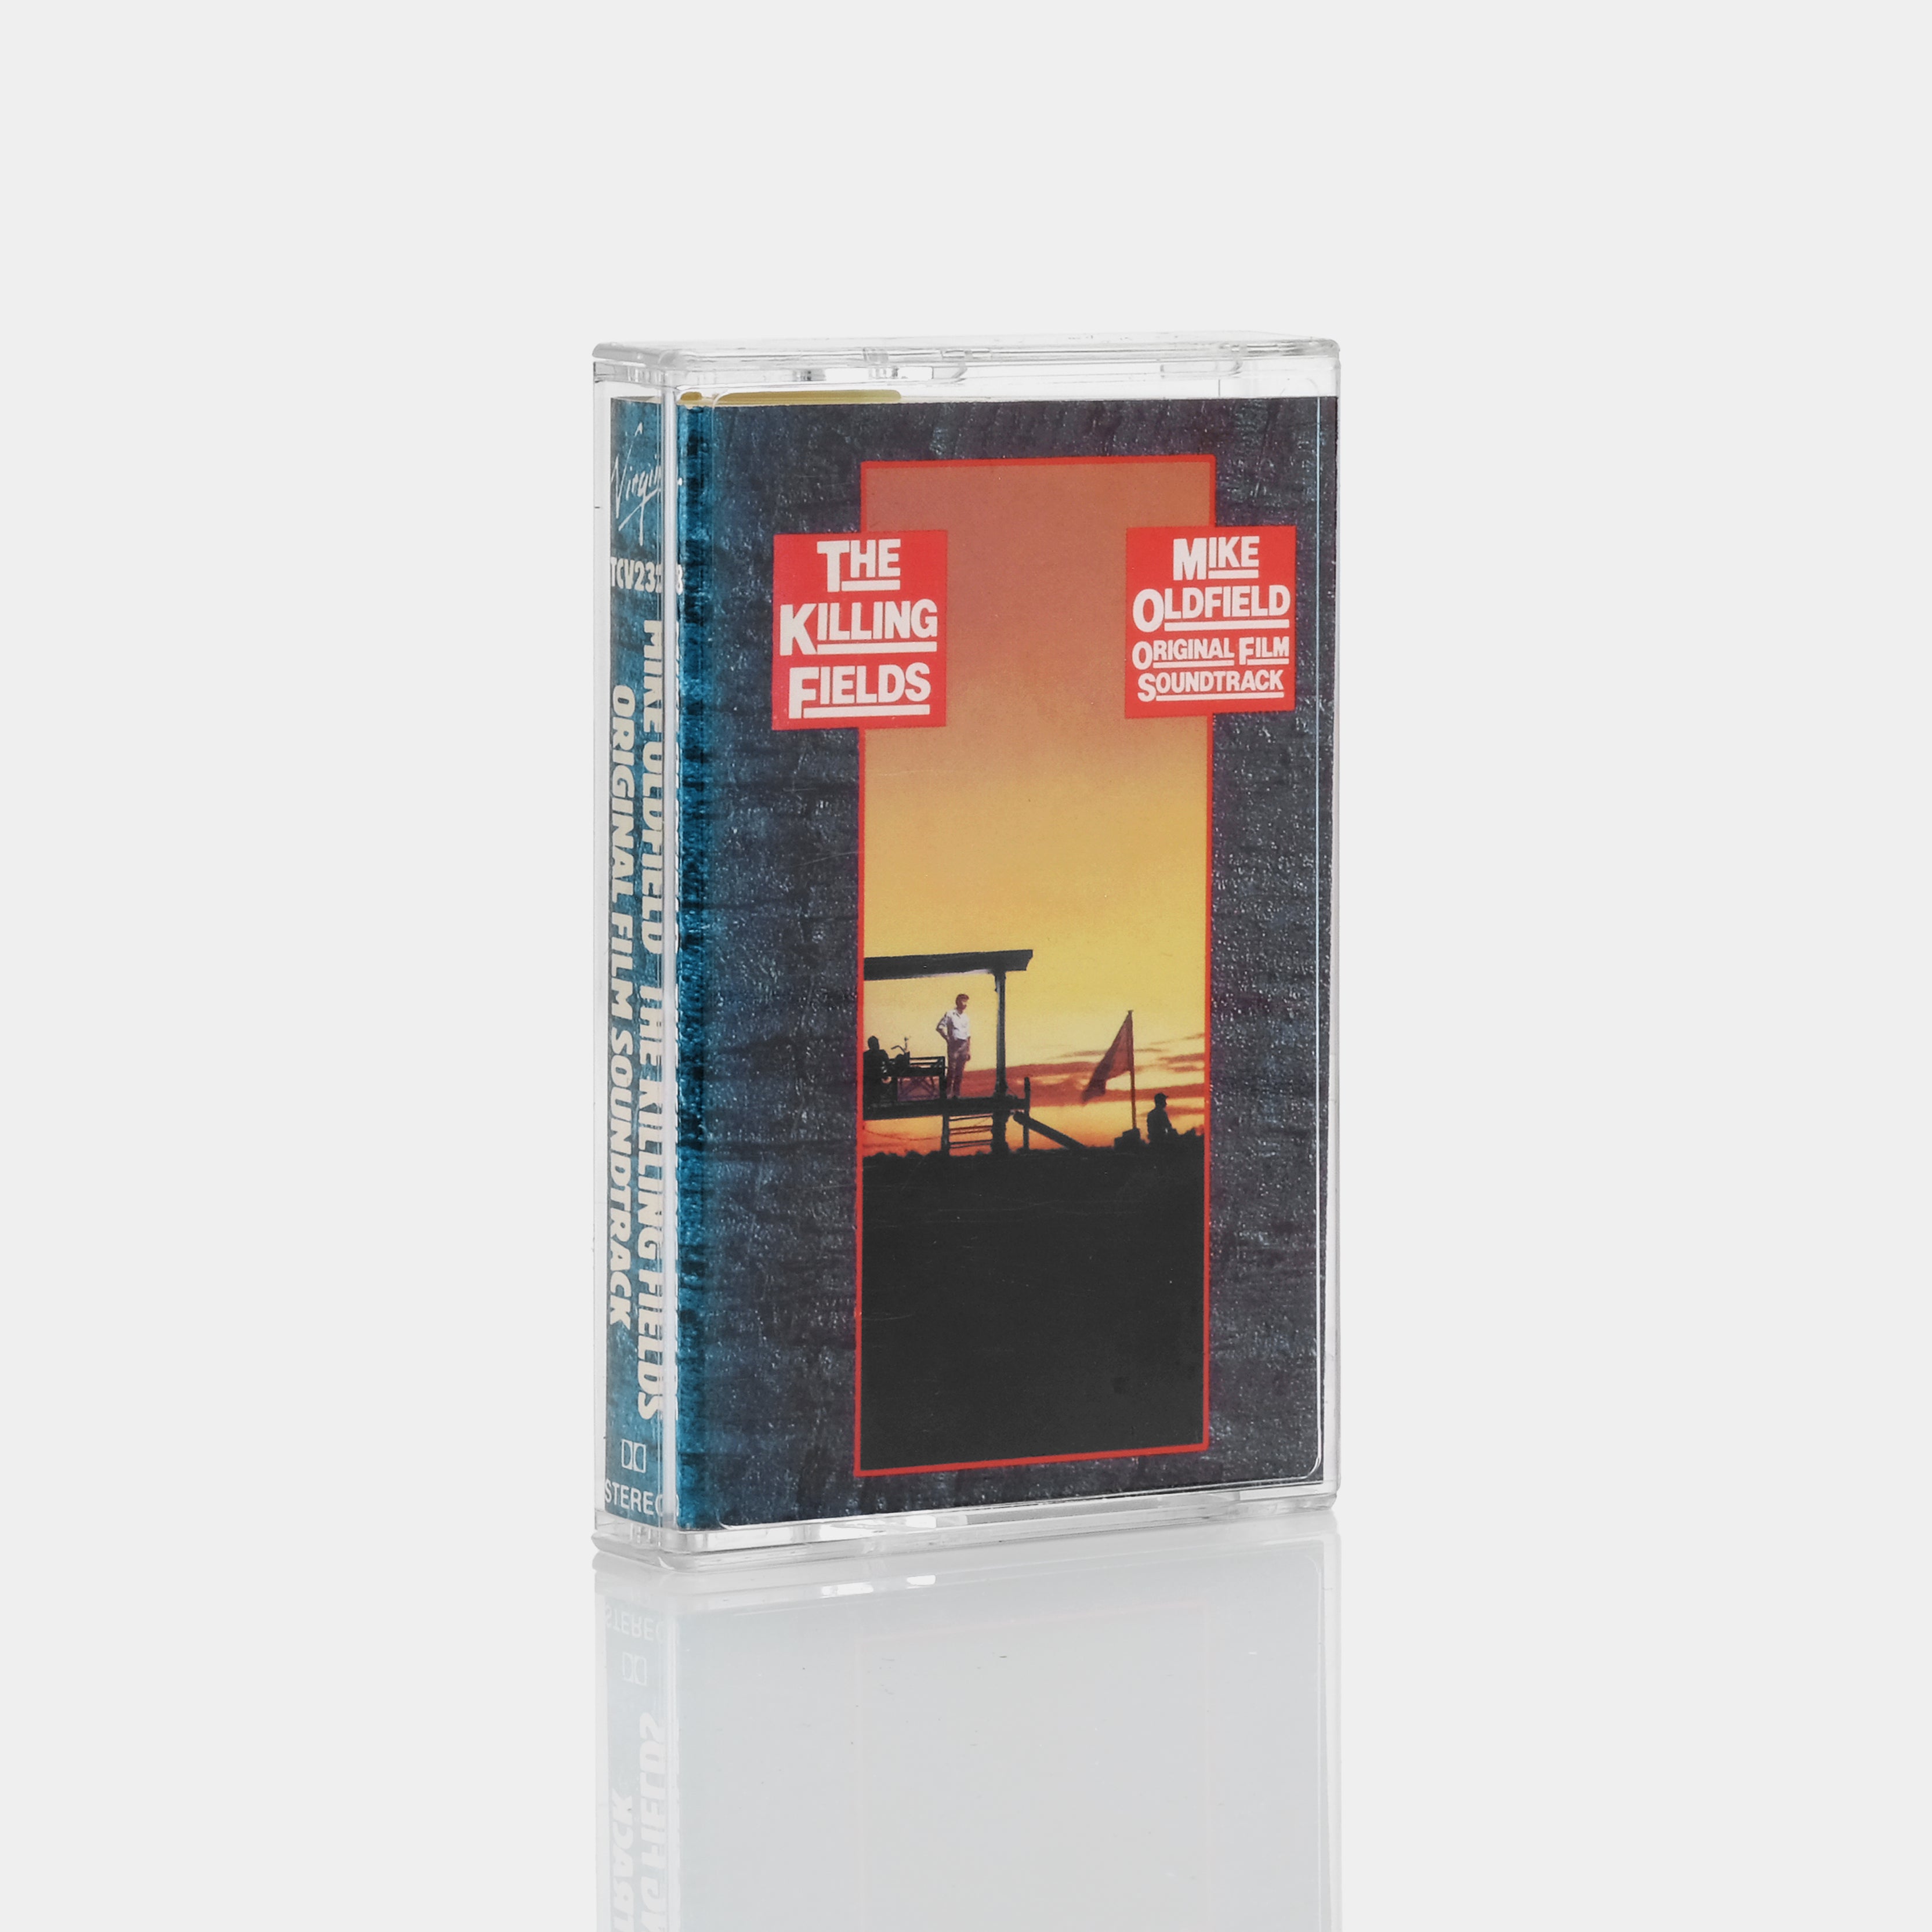 Mike Oldfield - The Killing Fields (Original Film Soundtrack) Cassette Tape